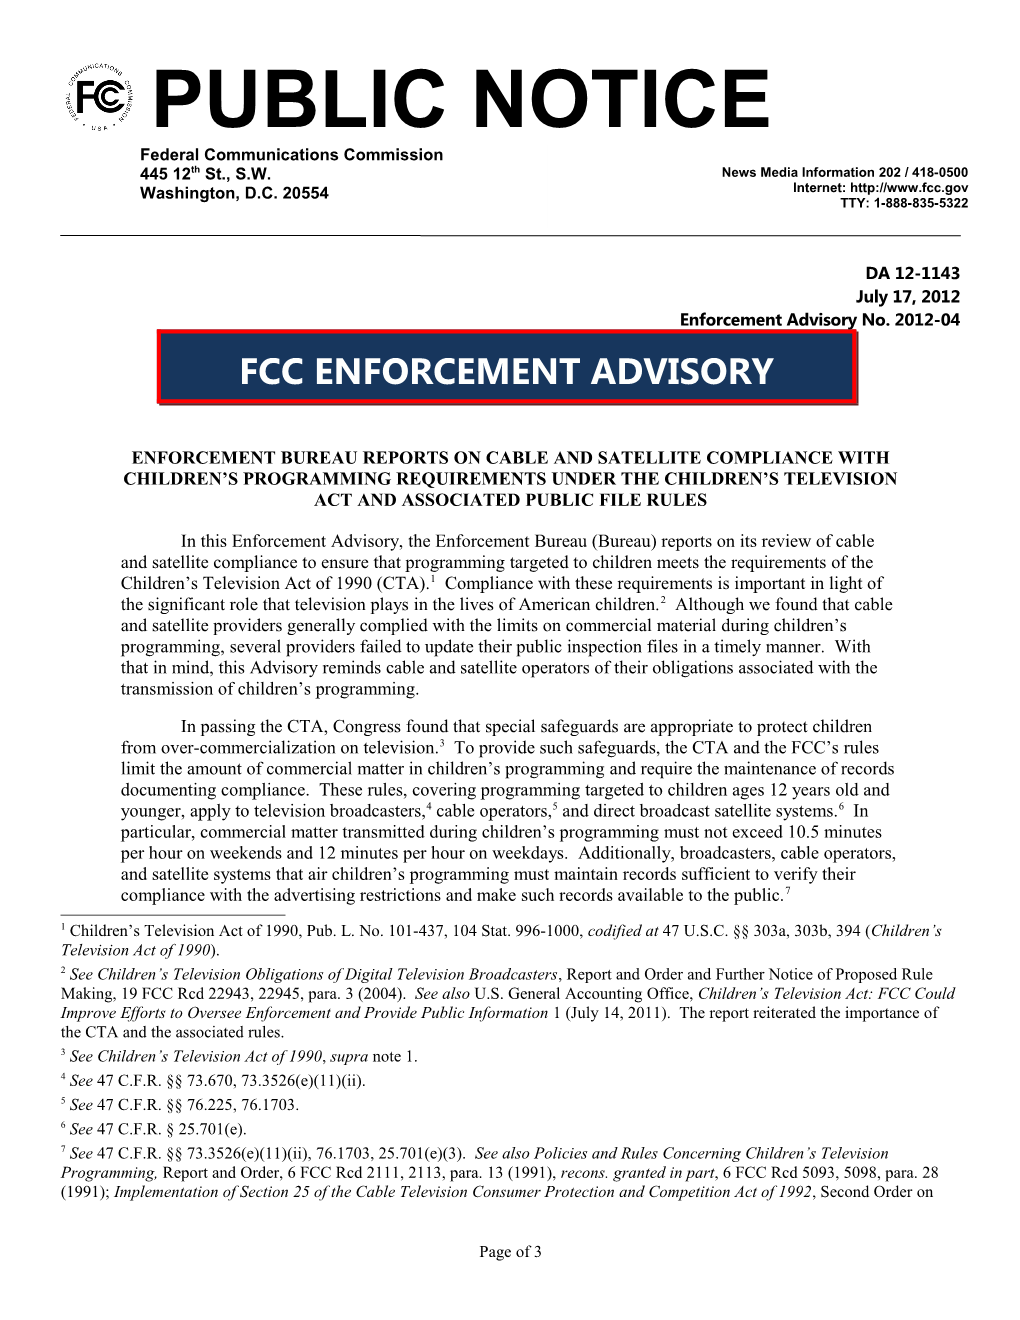 Enforcement Advisory No. 2012-04